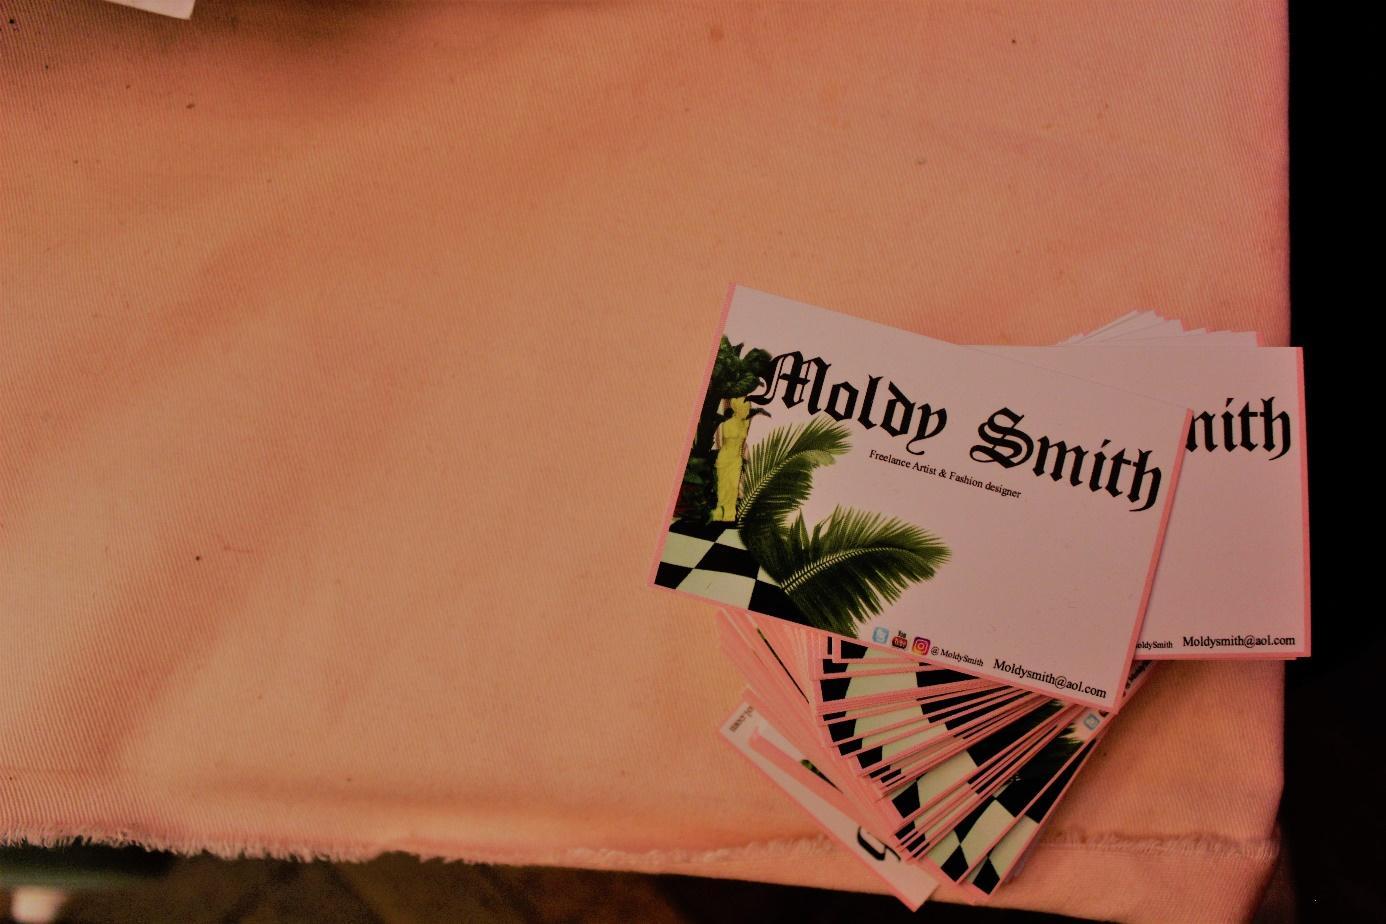 Moldy Smith's business cards.